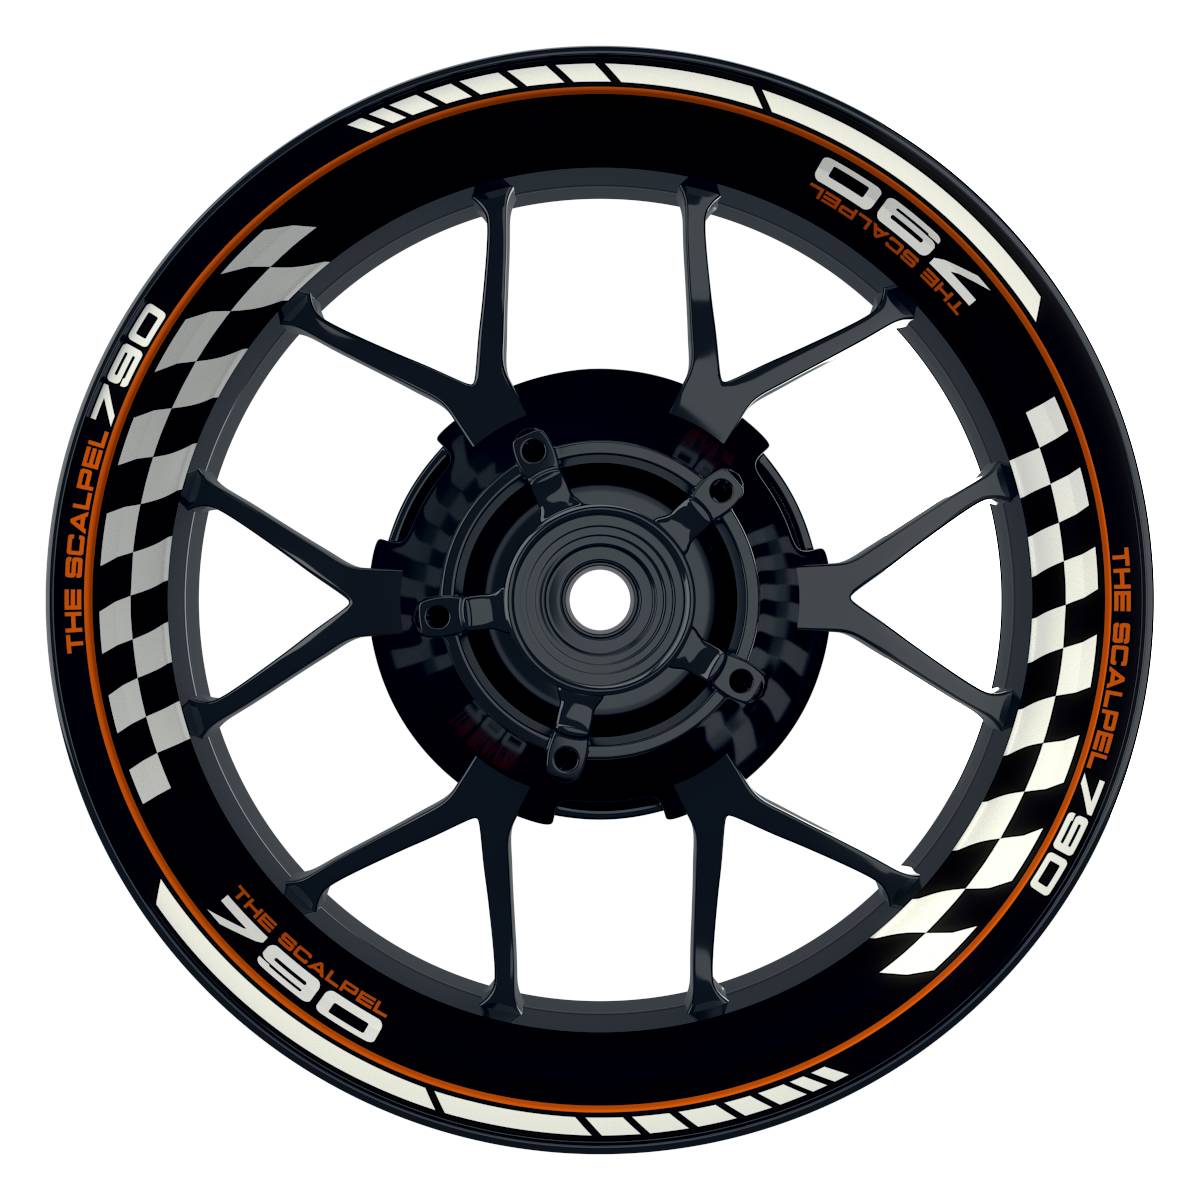 THE SCALPEL 790 Grid schwarz orange Wheelsticker Felgenaufkleber